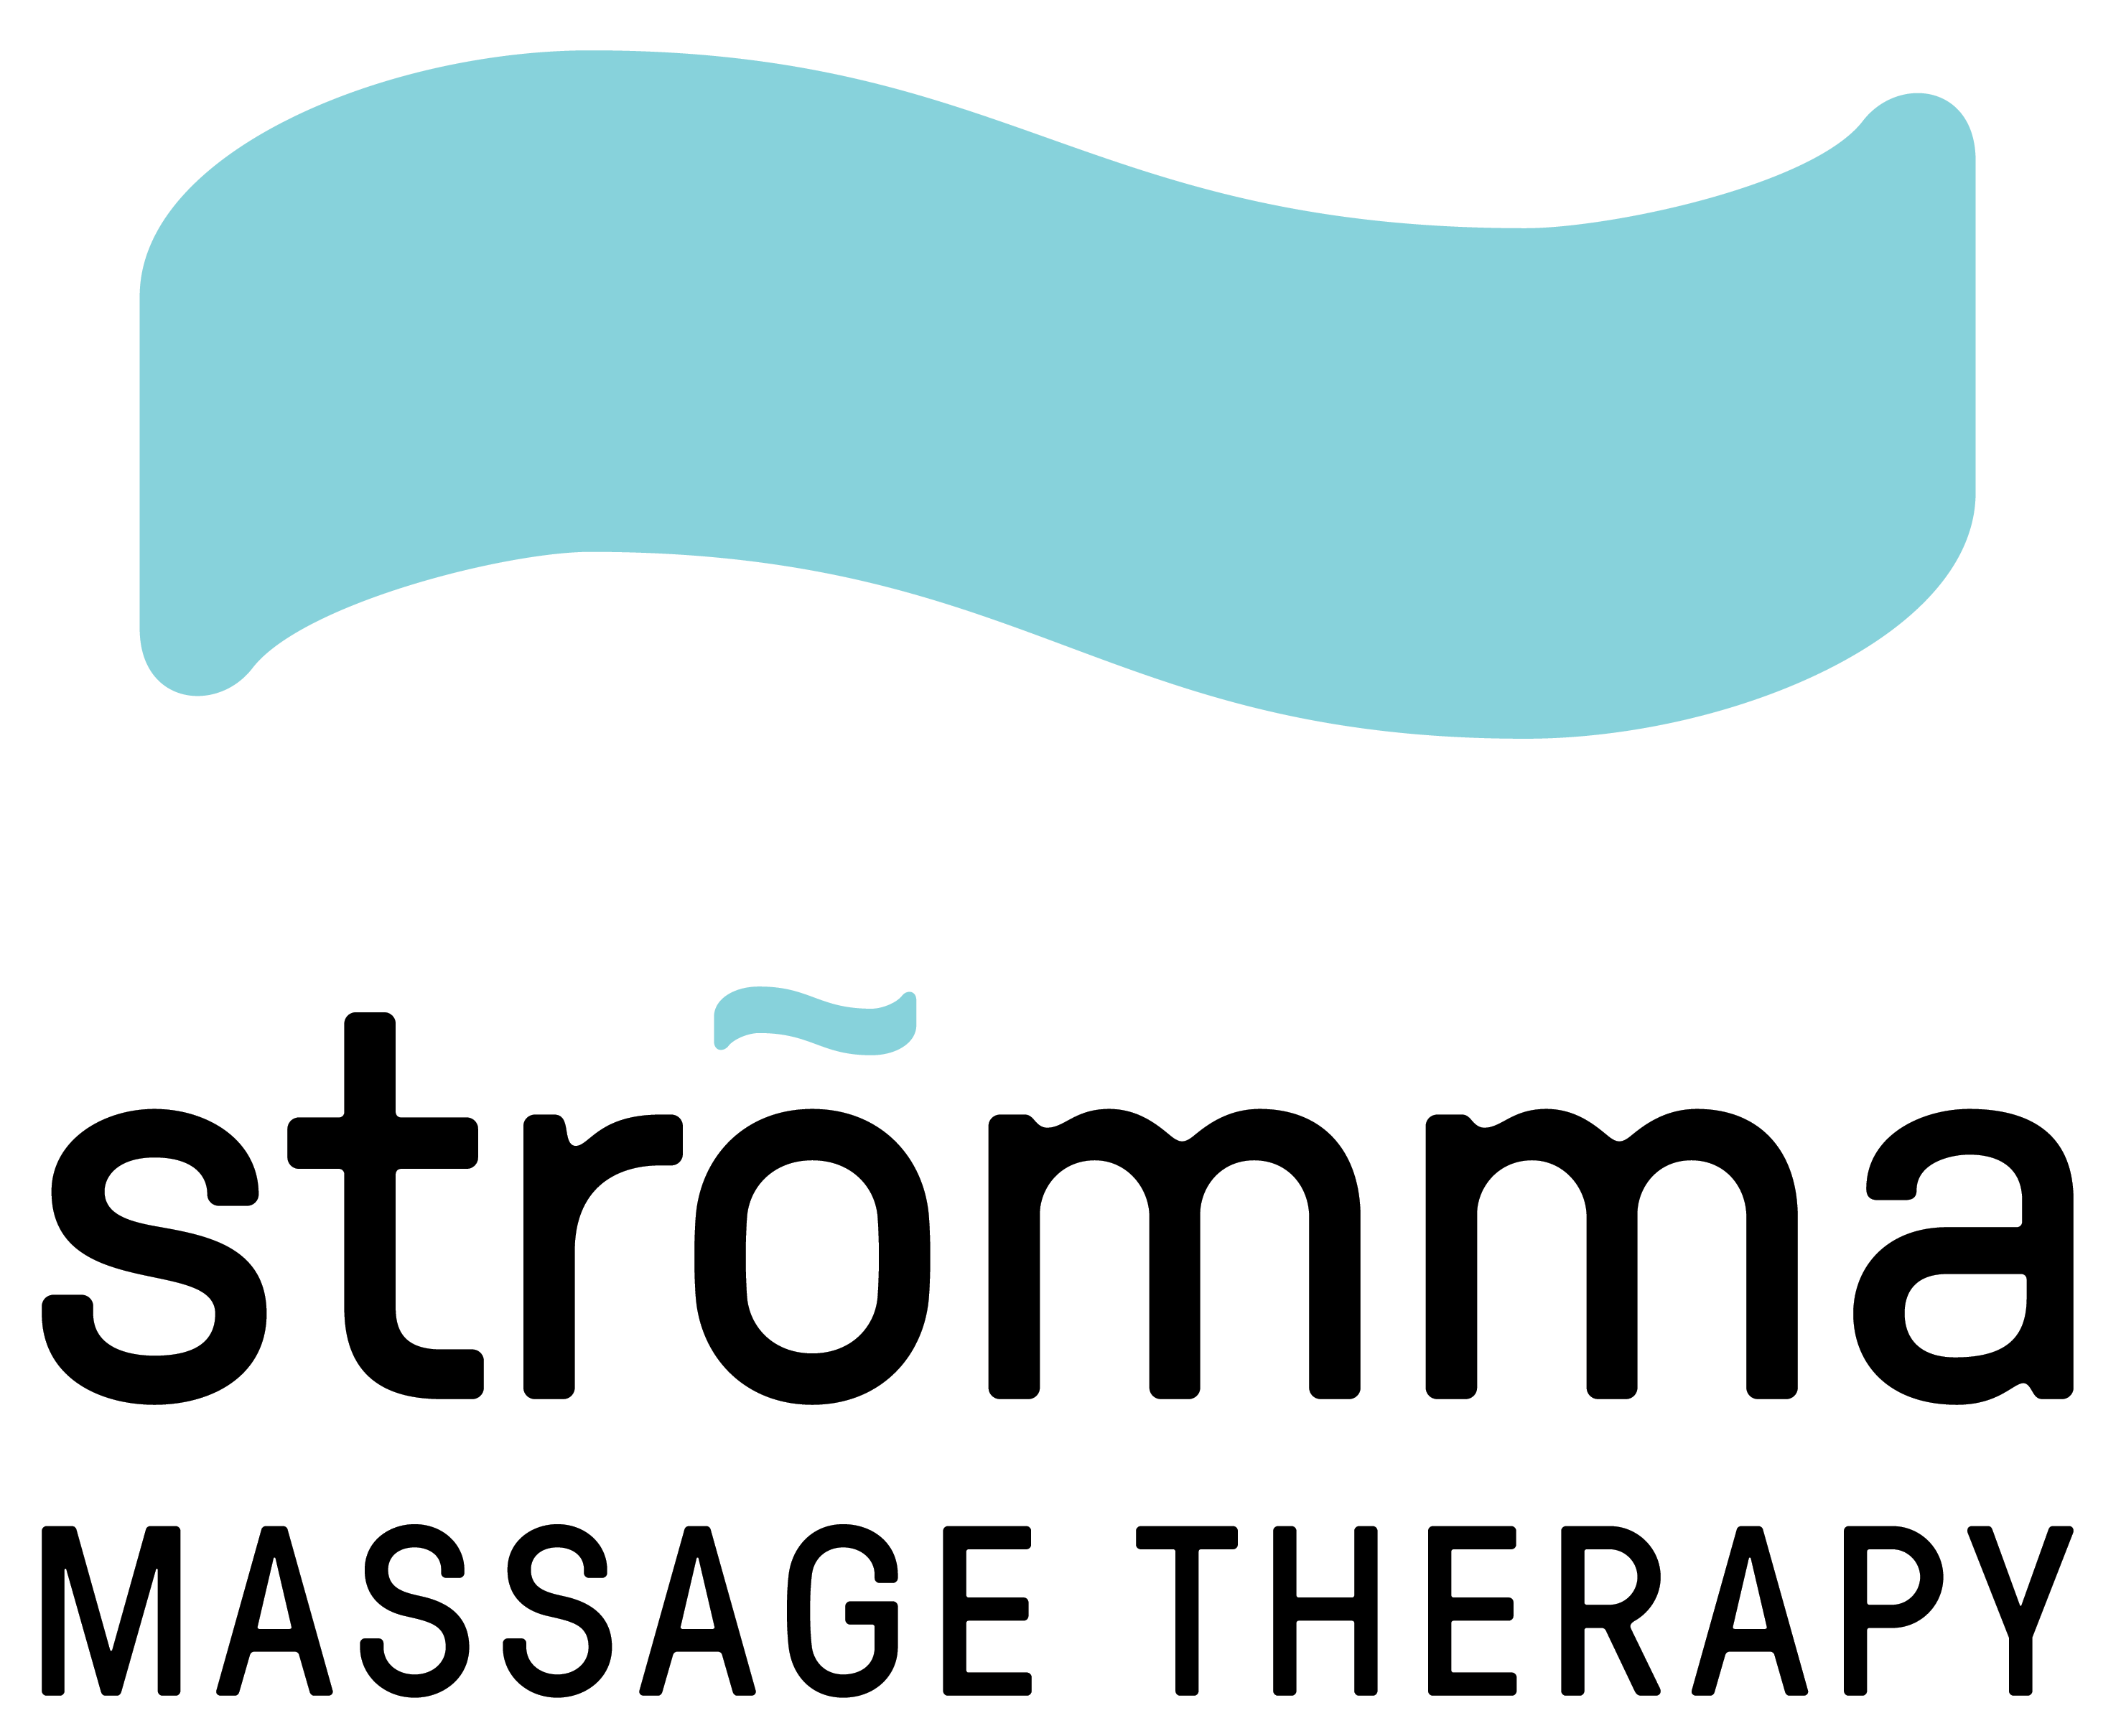 Stromma Massage Therapy